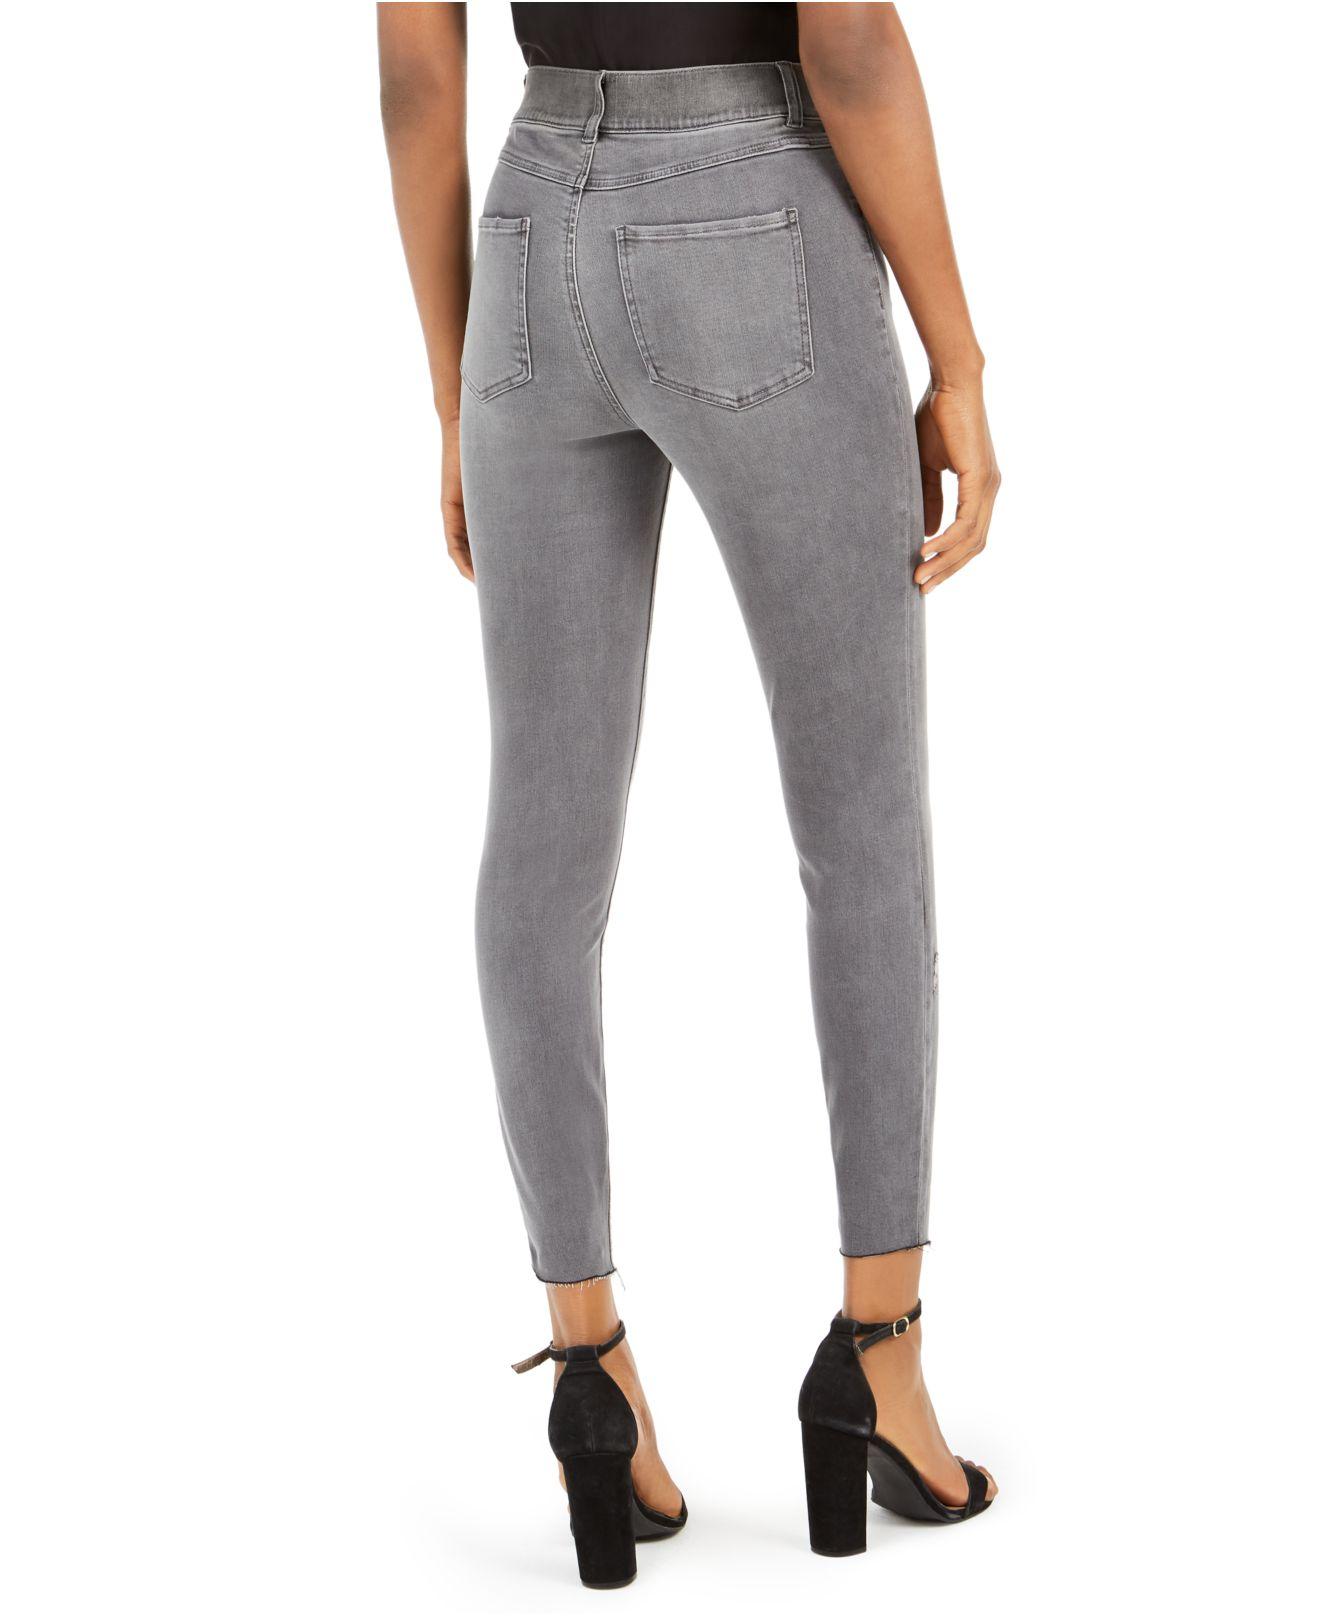 Spanx Denim Distressed Skinny Jeans in Vintage Grey (Gray) | Lyst